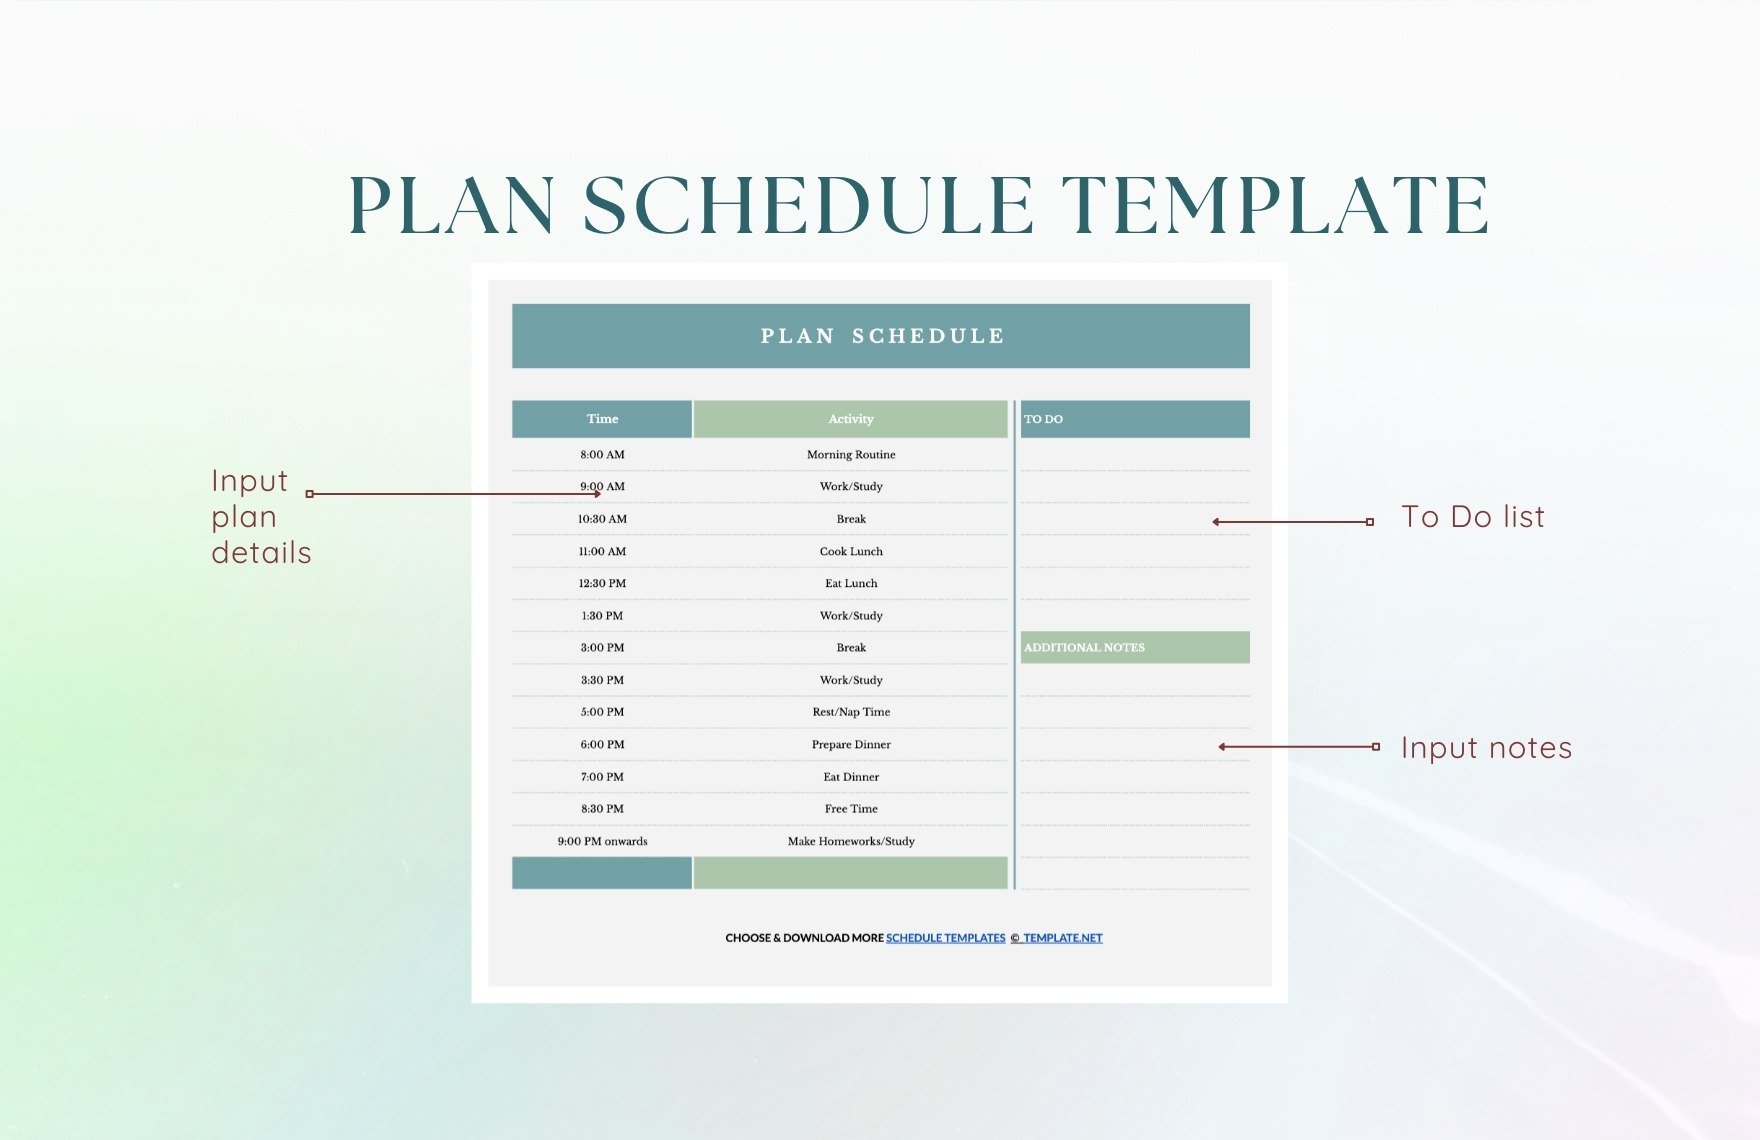 Plan Schedule Template